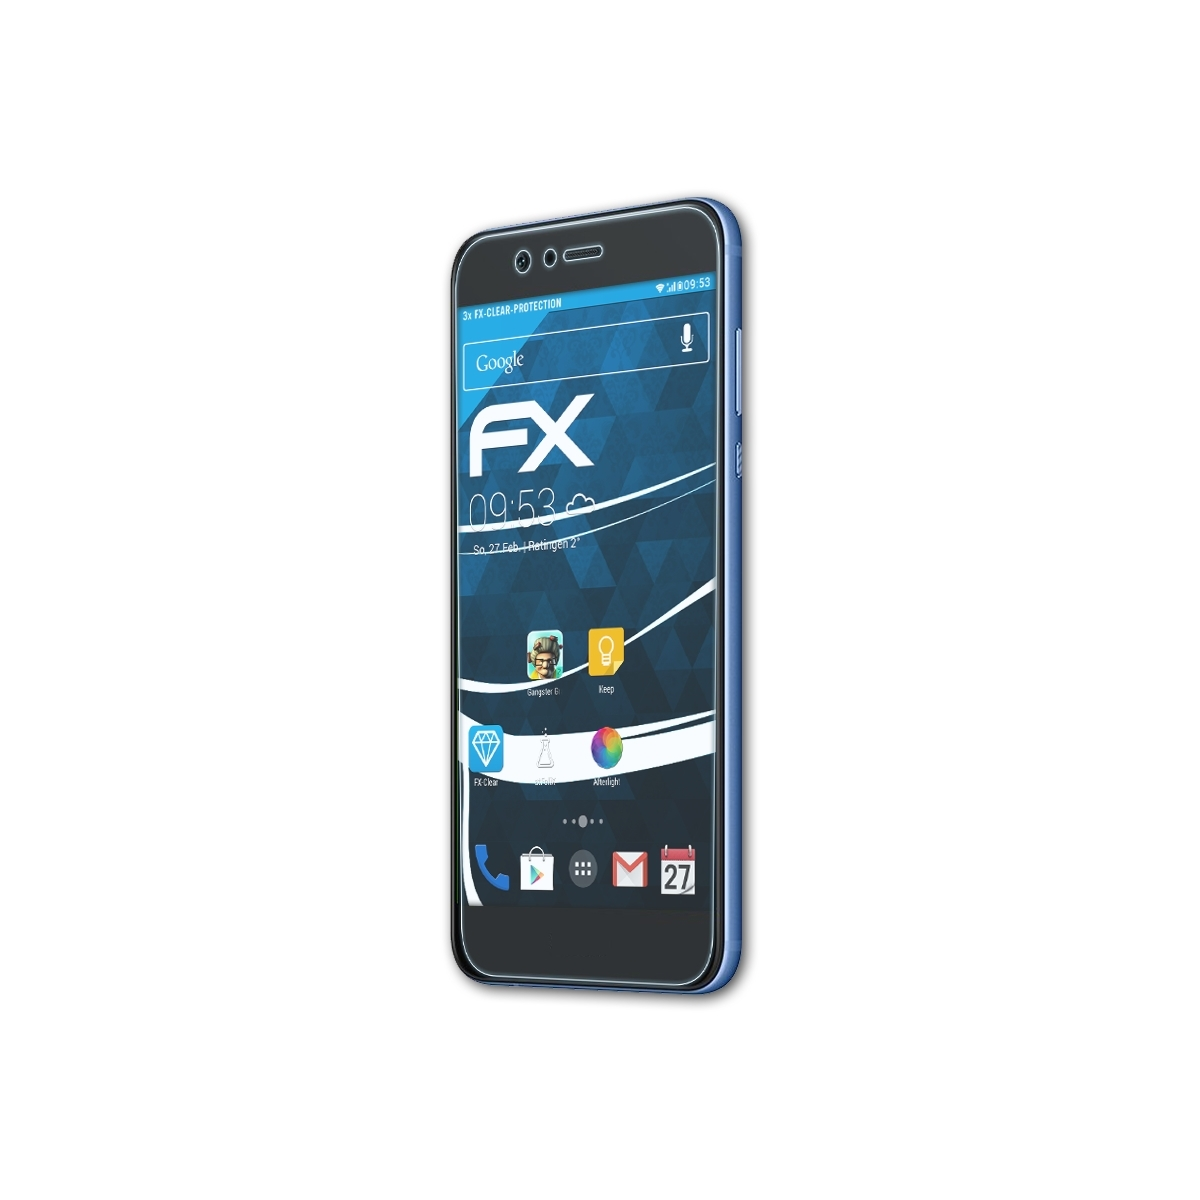 Huawei Displayschutz(für FX-Clear ATFOLIX Nova 2 3x Plus)